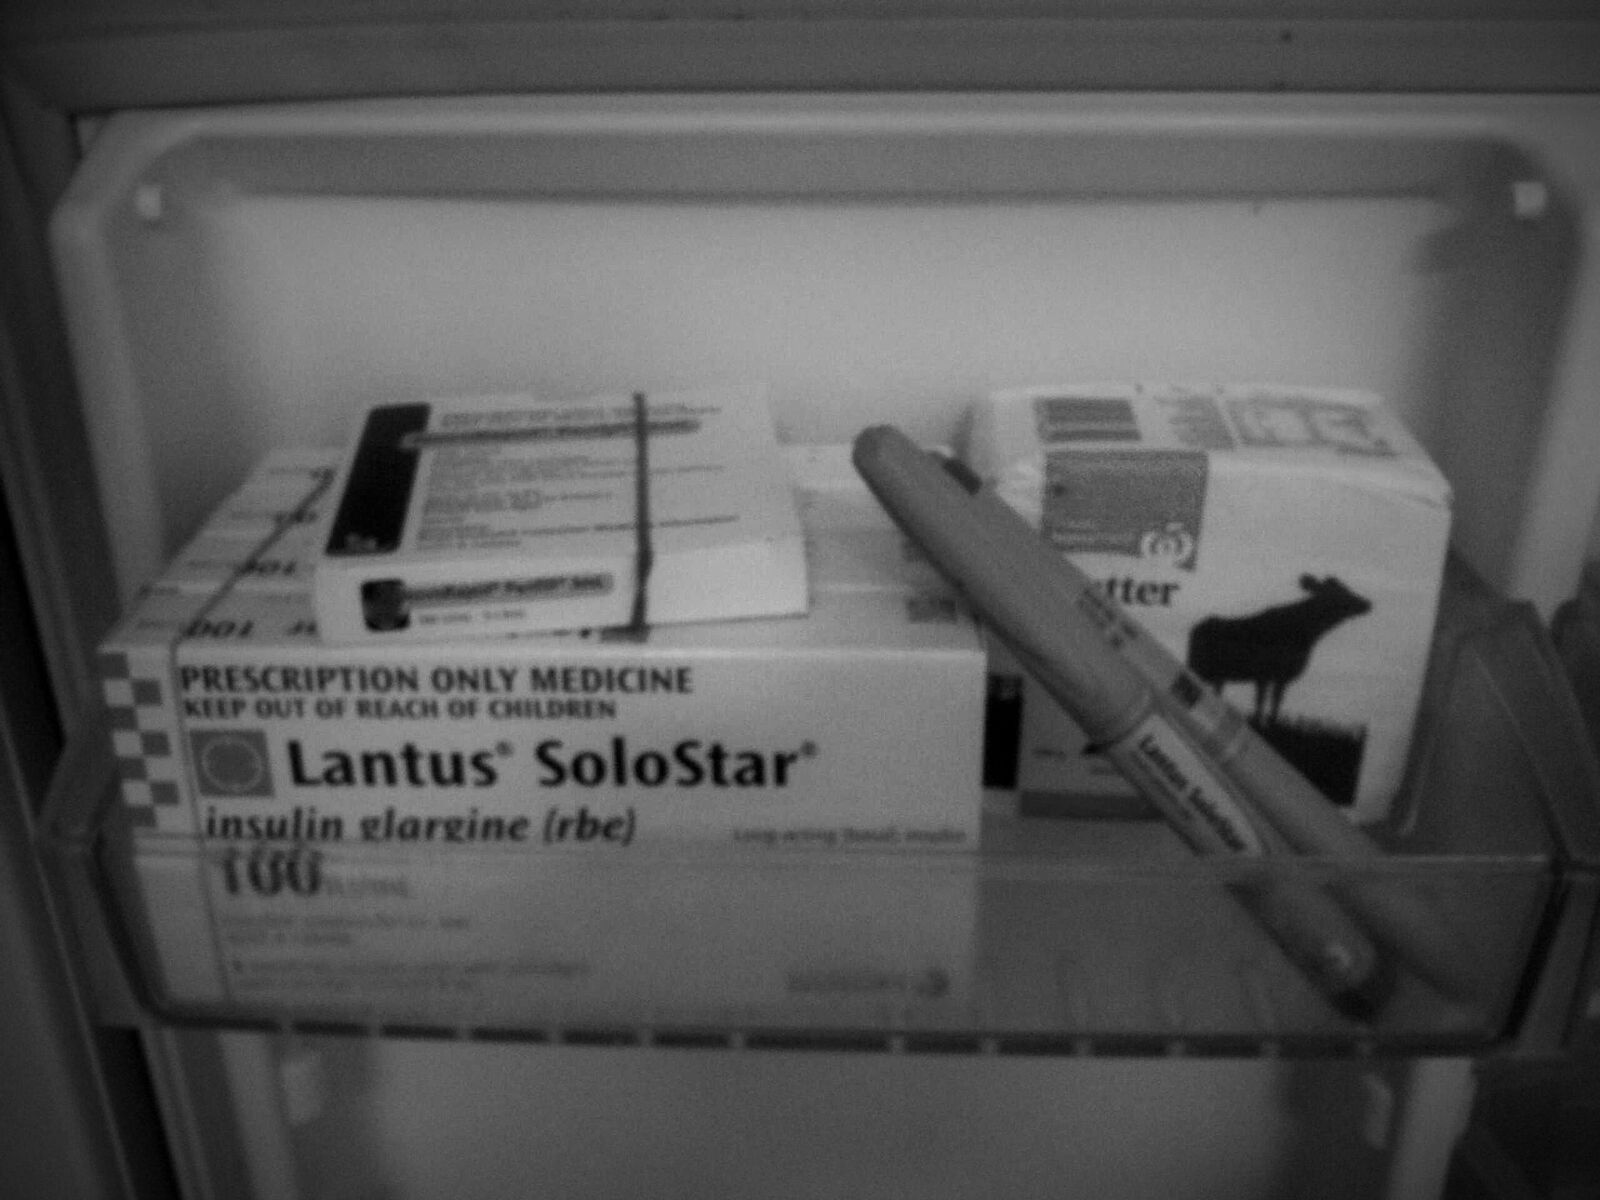 insulin being stored in fridge